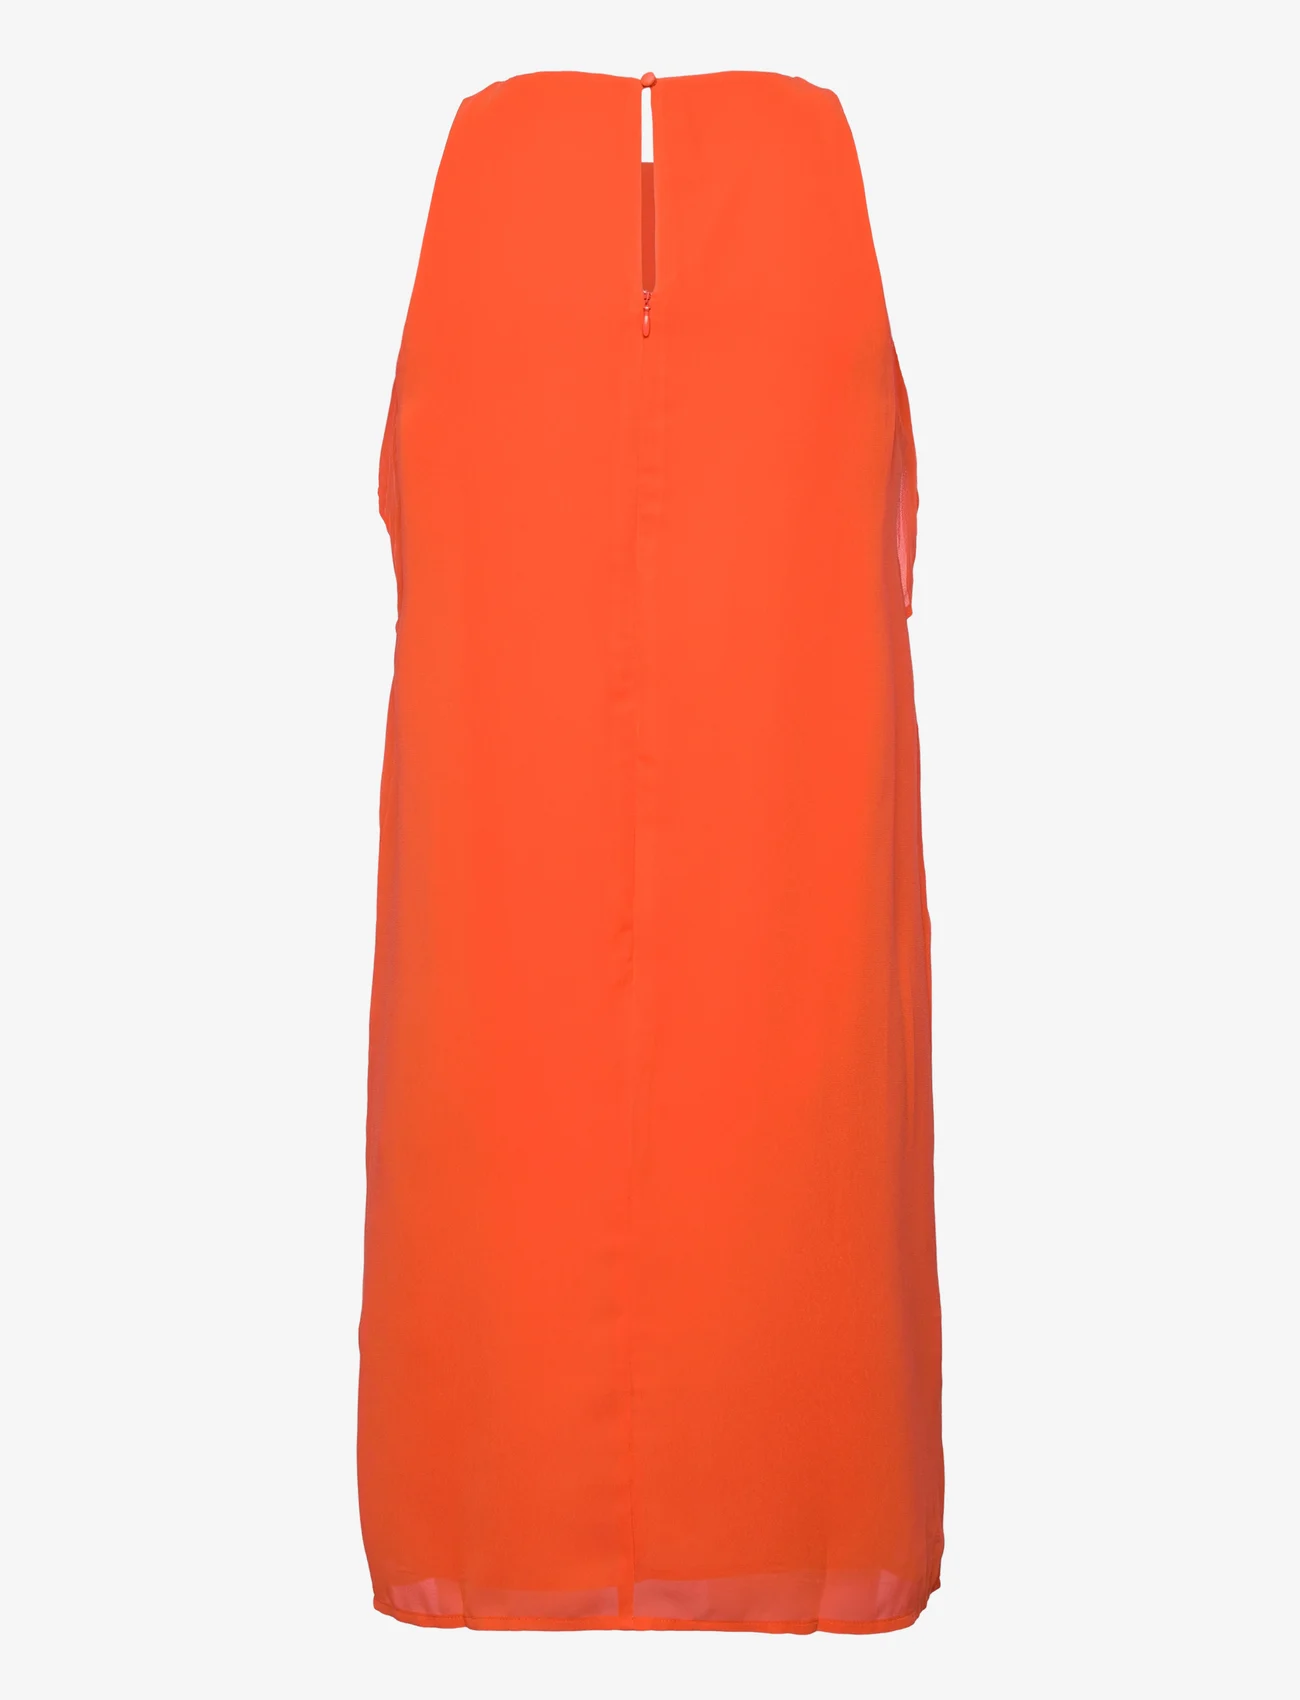 Esprit Casual - Dresses light woven - peoriided outlet-hindadega - bright orange - 1